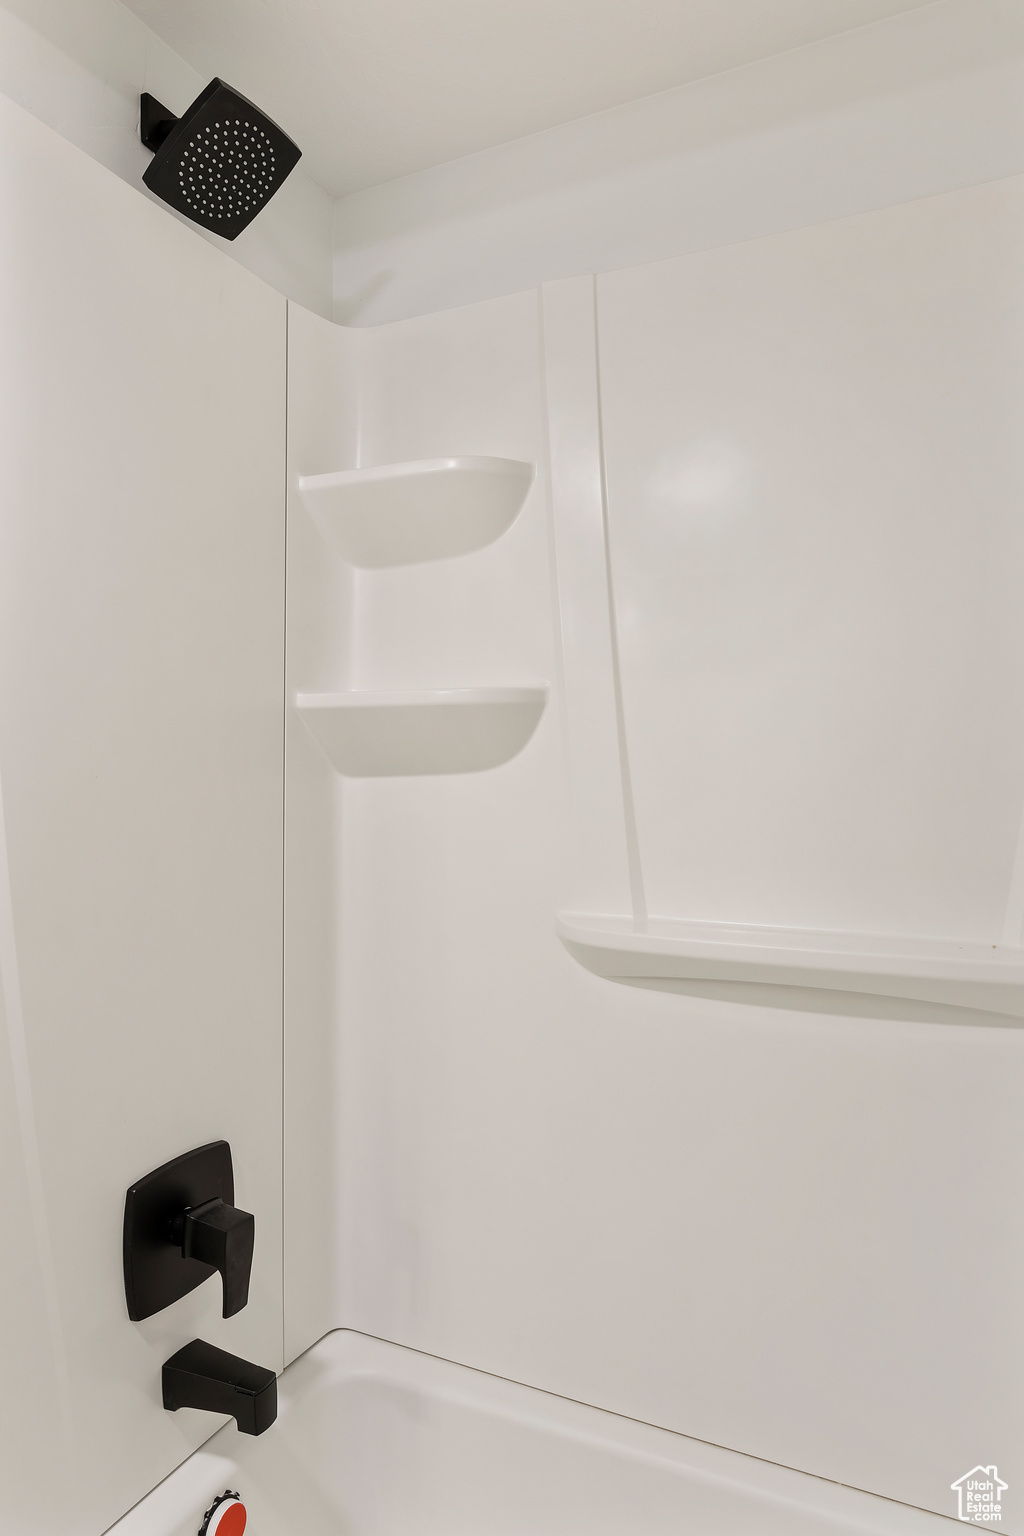 Interior details with shower / bath combination